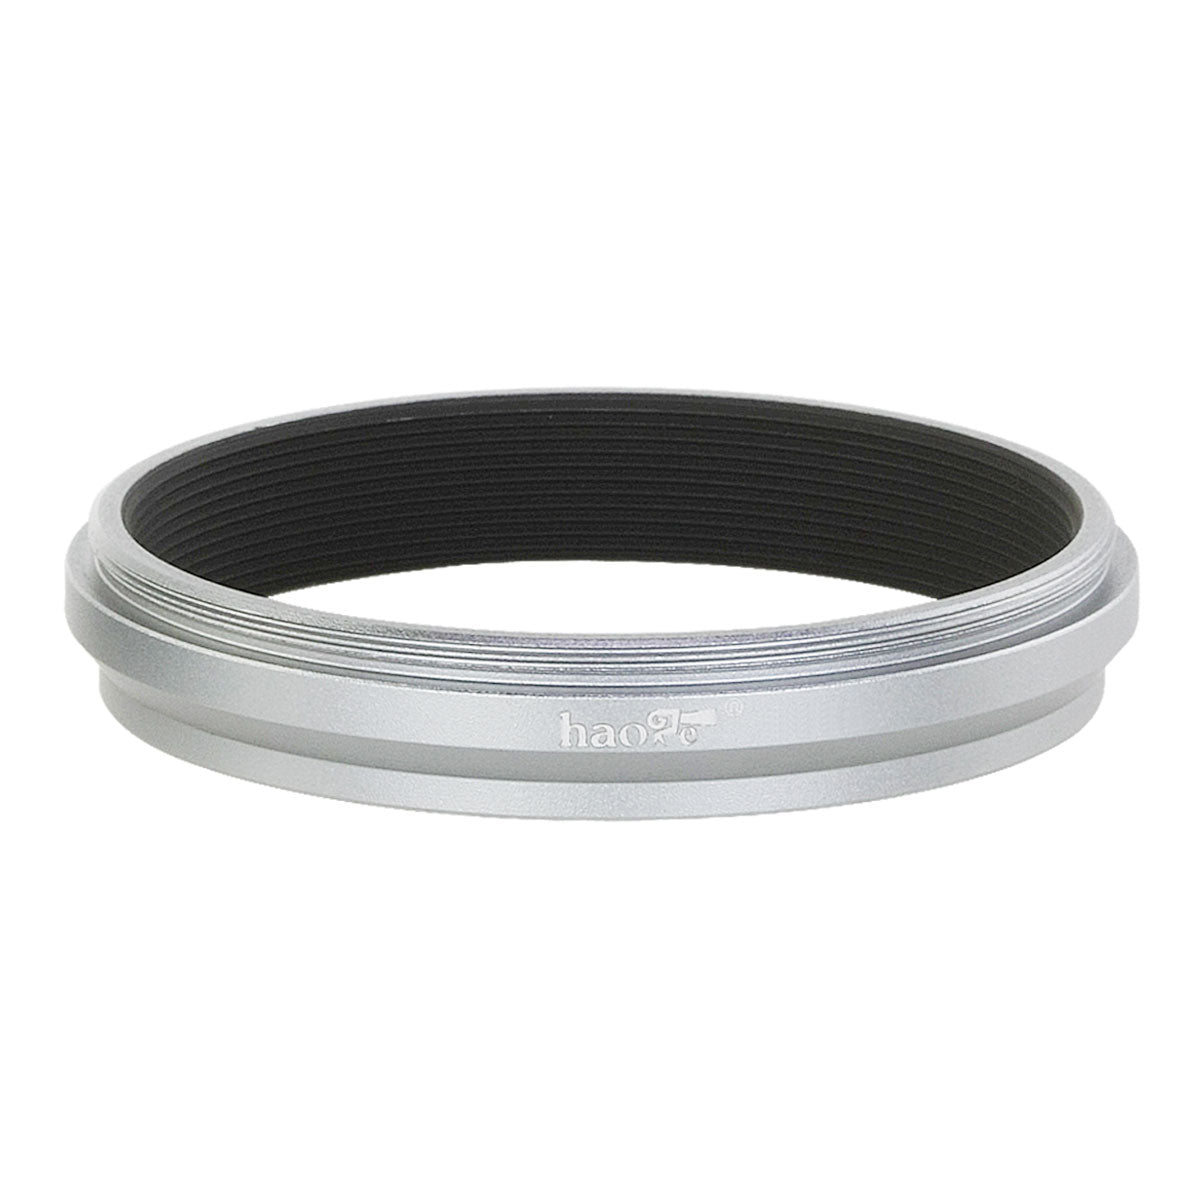 Haoge Lens Filter Adapter Ring for Fujifilm Fuji FinePix X70 X100 X100S X100T X100F Camera fit 49mm UV CPL ND Filter Lens Cap Replace Fujifilm AR-X100 Silver